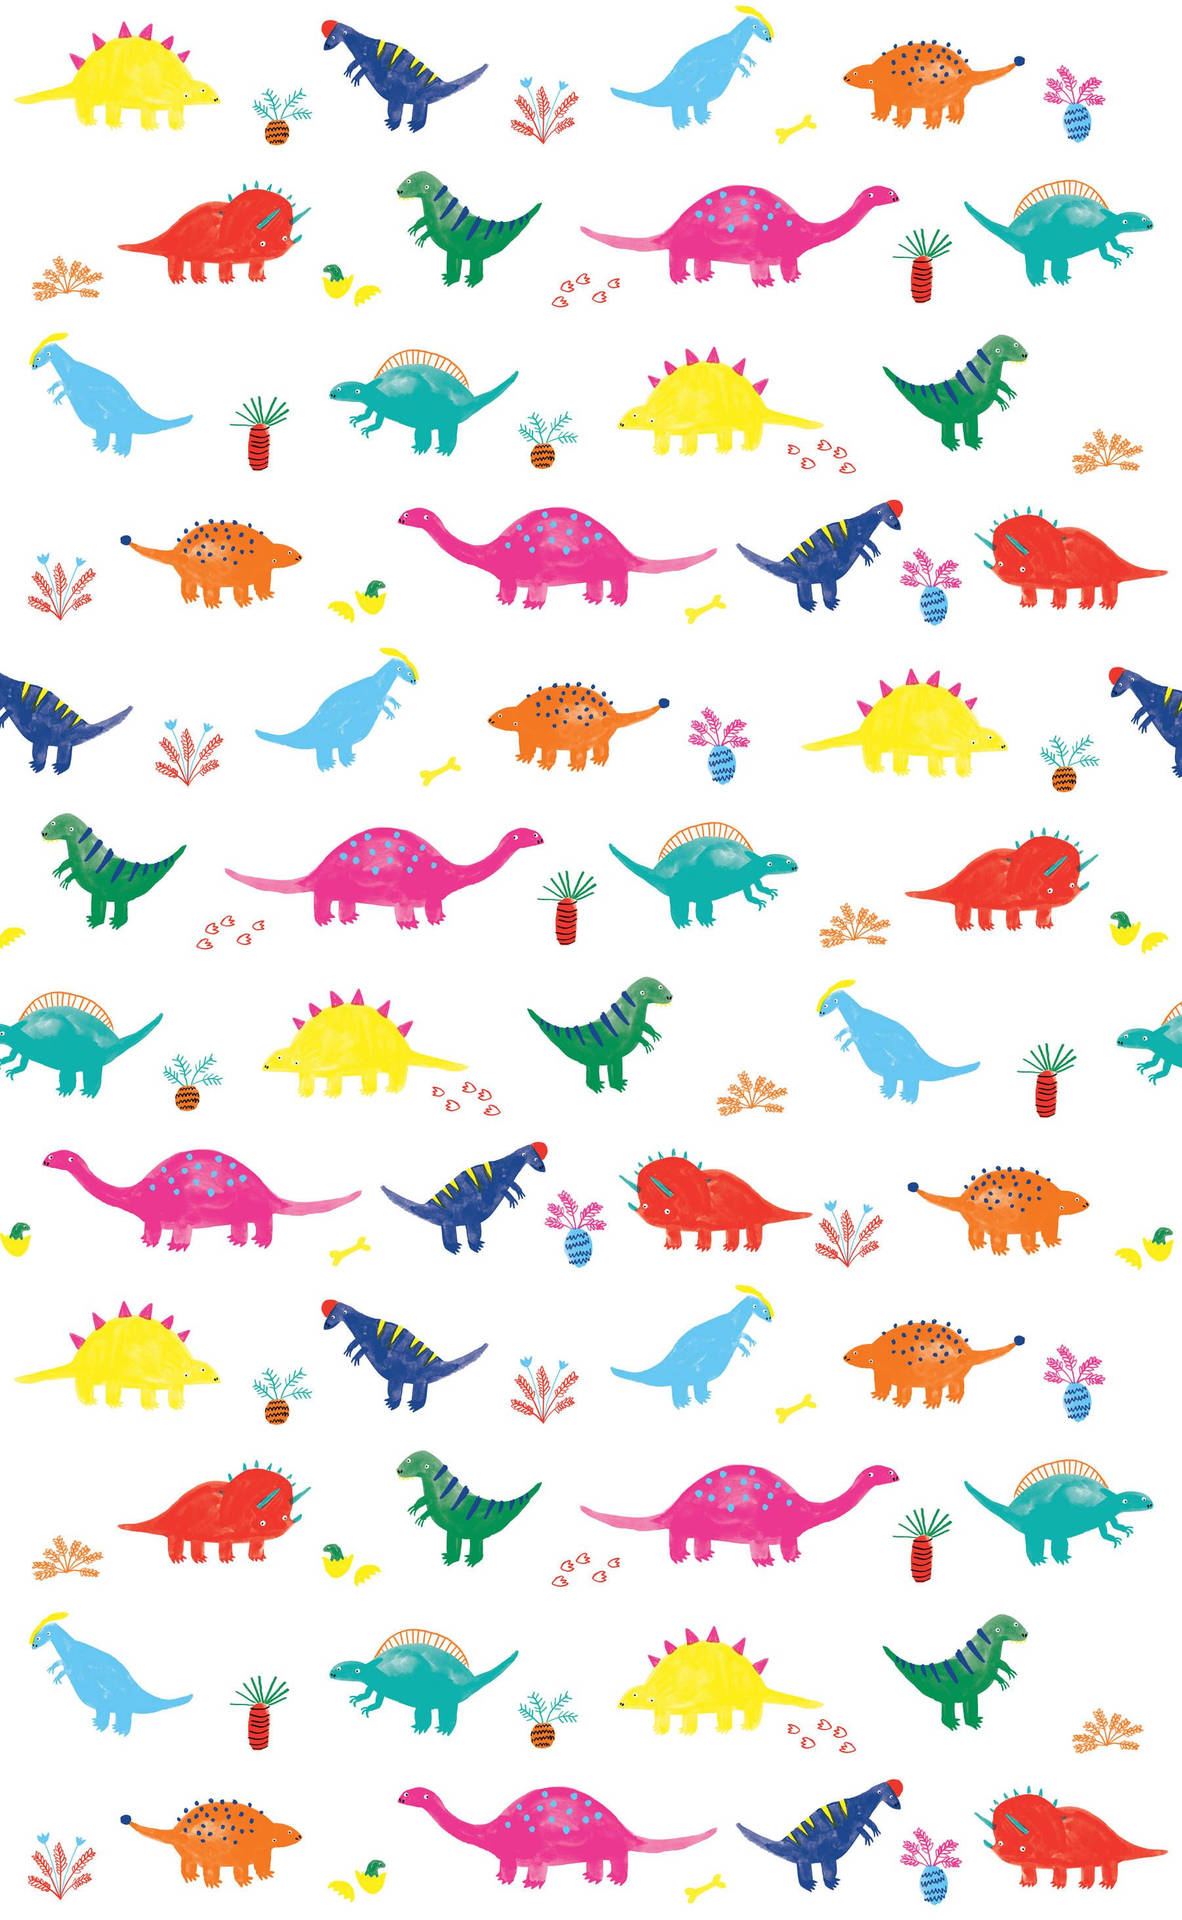 Upplevsötisen Av Dinosaurier Med Den Senaste Iphone-tapeten. Wallpaper